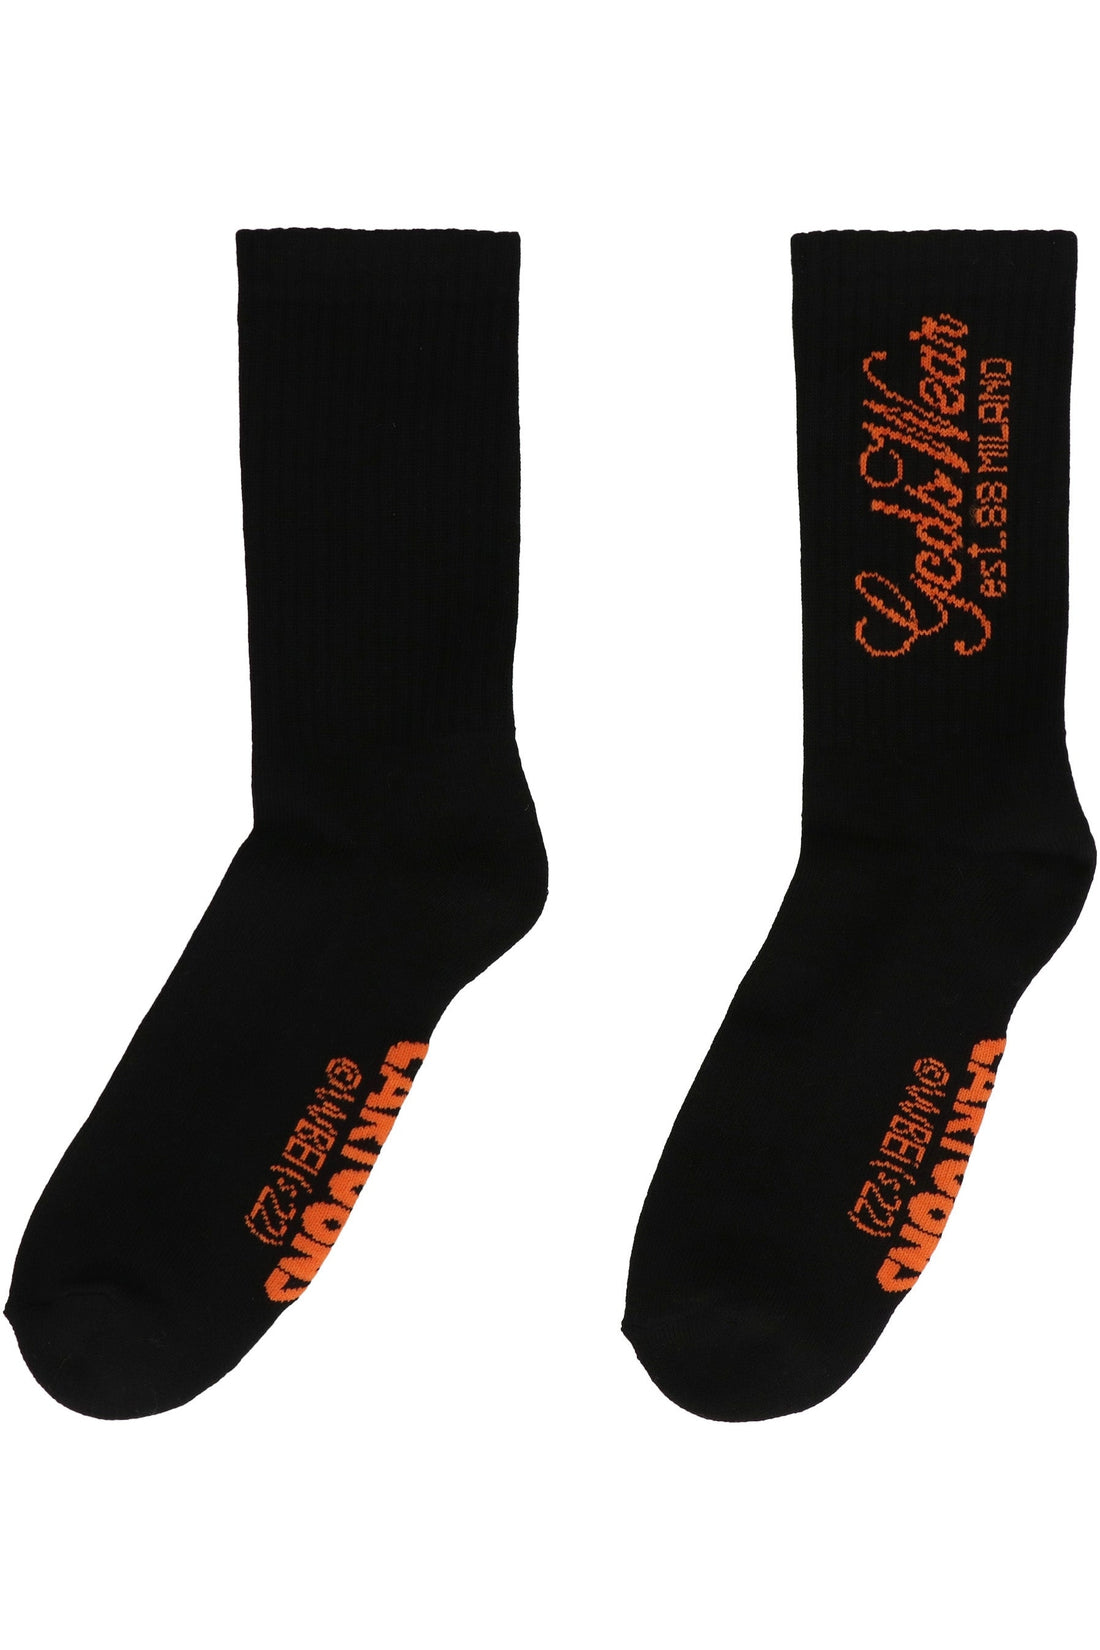 GCDS-OUTLET-SALE-Cotton socks with logo-ARCHIVIST